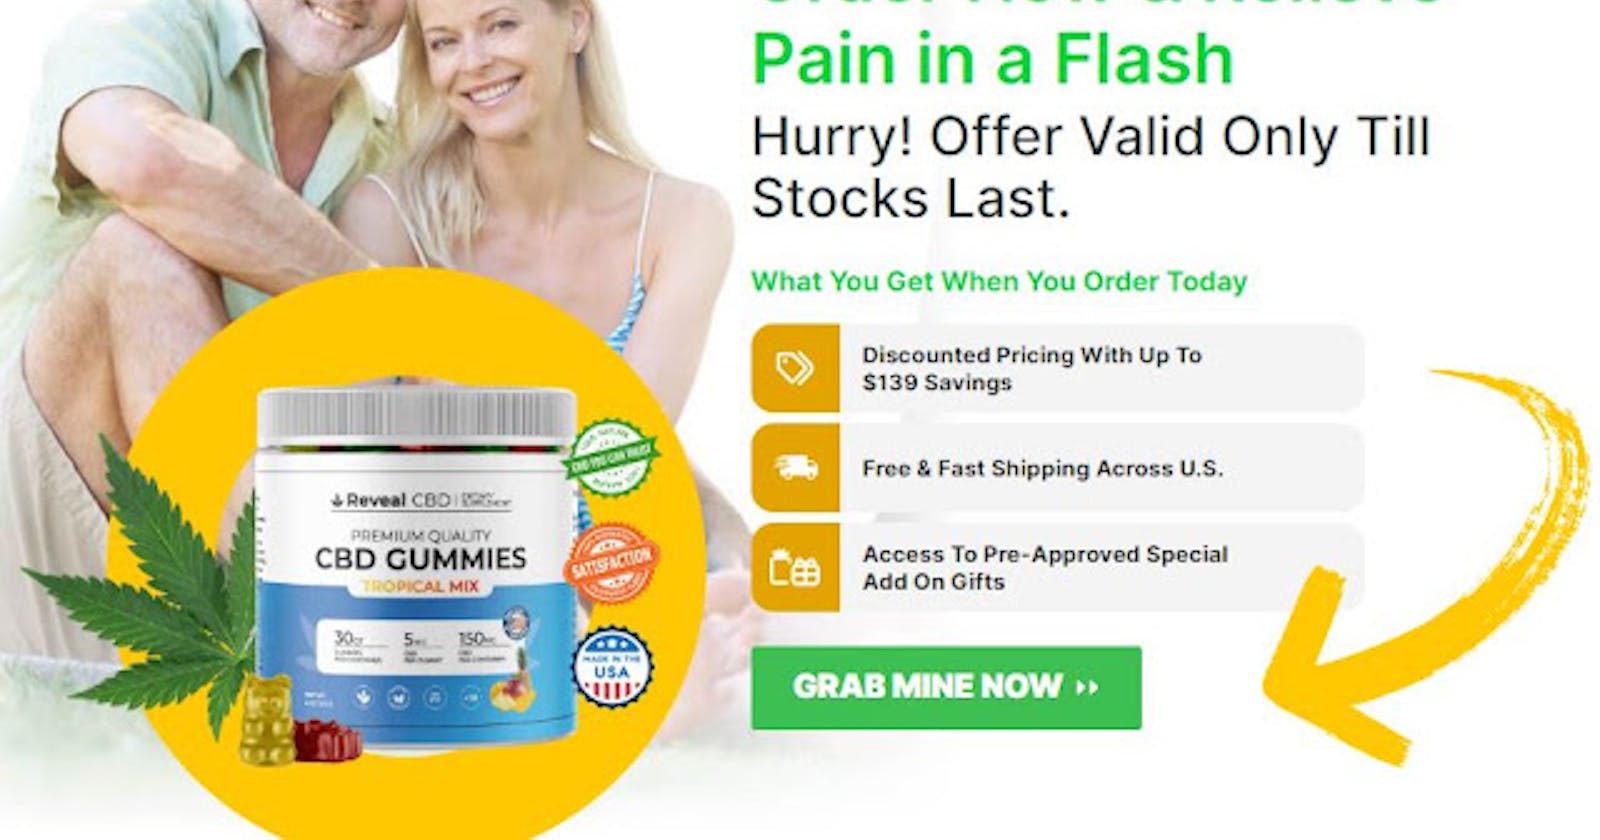 Reveal CBD Gummies Reviews: *ENERGIZE HEALTH* Best Way Pain Relief!